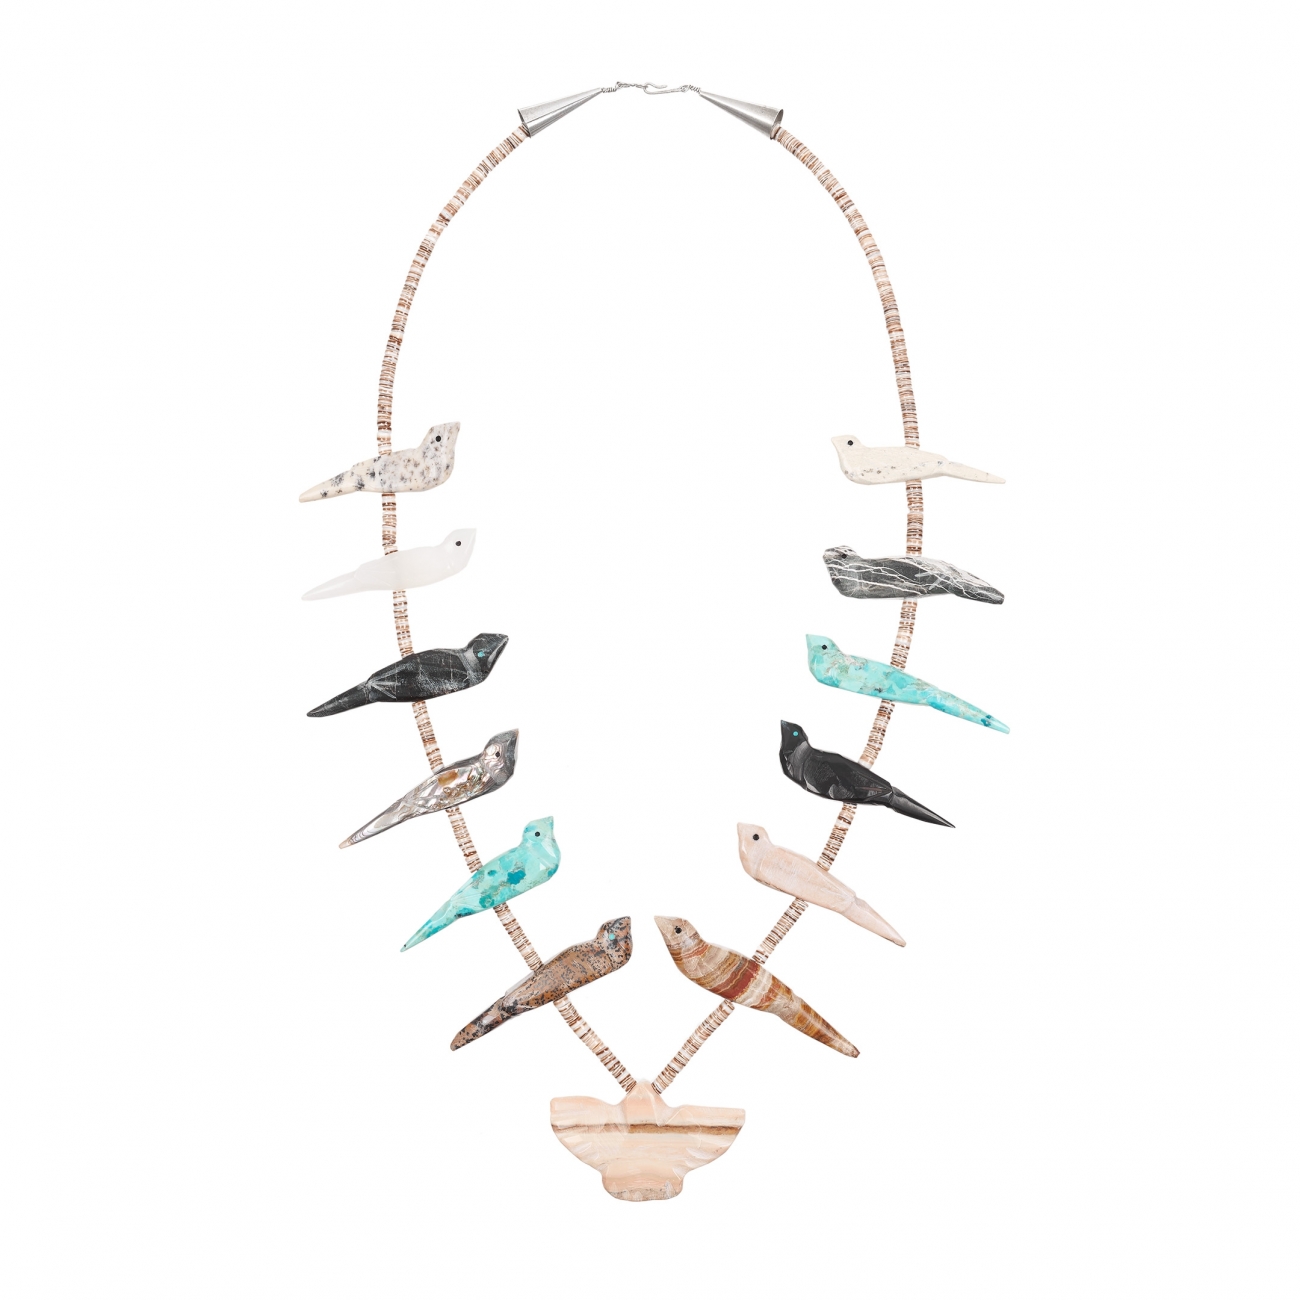 Fetish necklace COFEw19 in stones and shells - Harpo Paris